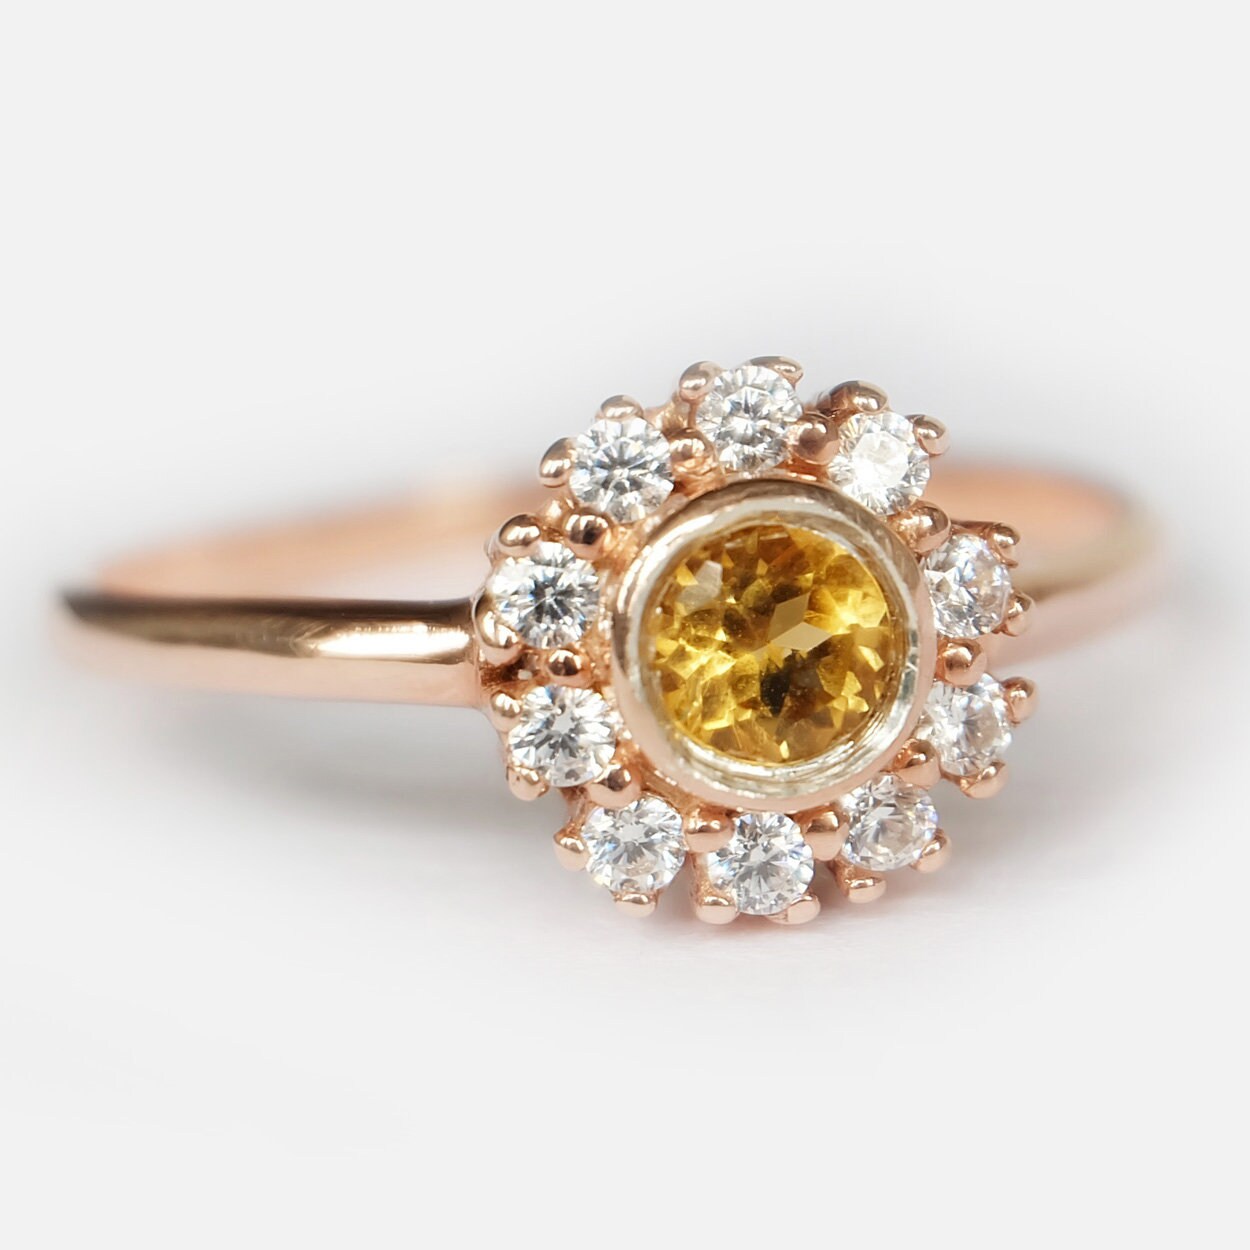 Diamond Sapphire Engagement Ring Rose Gold Daisy Promise | Etsy